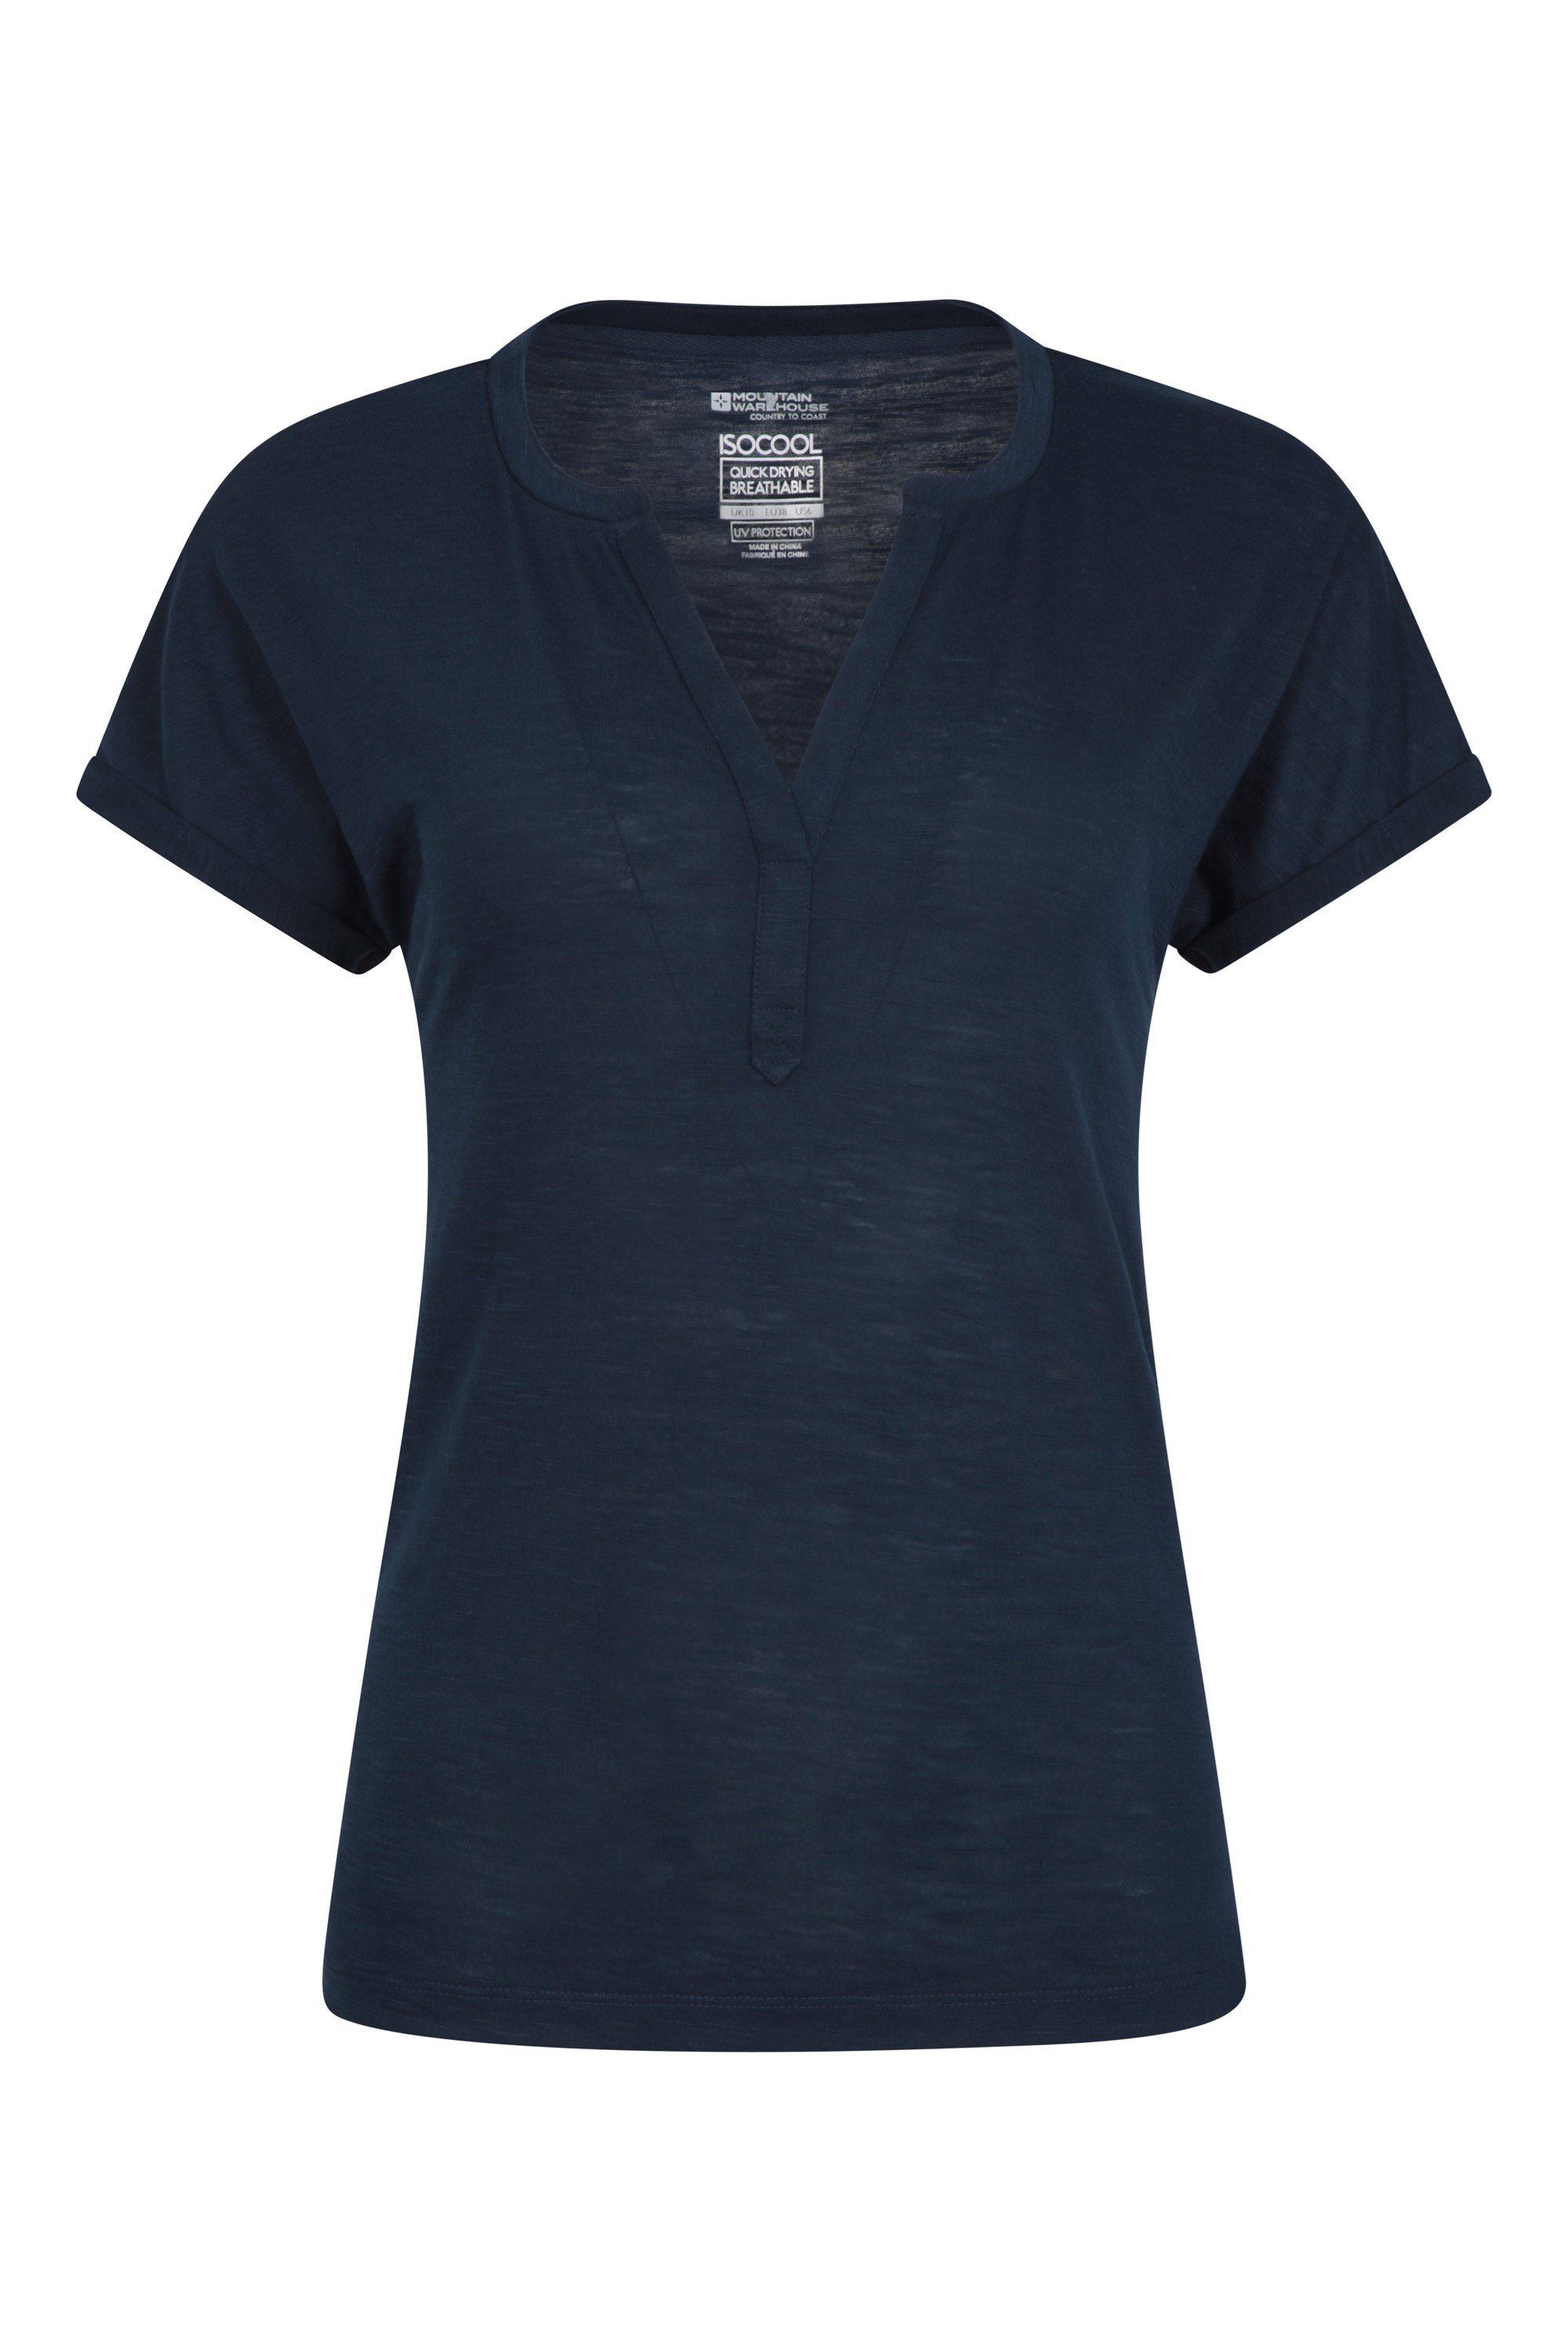 Skye Quick-dry Womens Slub T-shirt - Navy